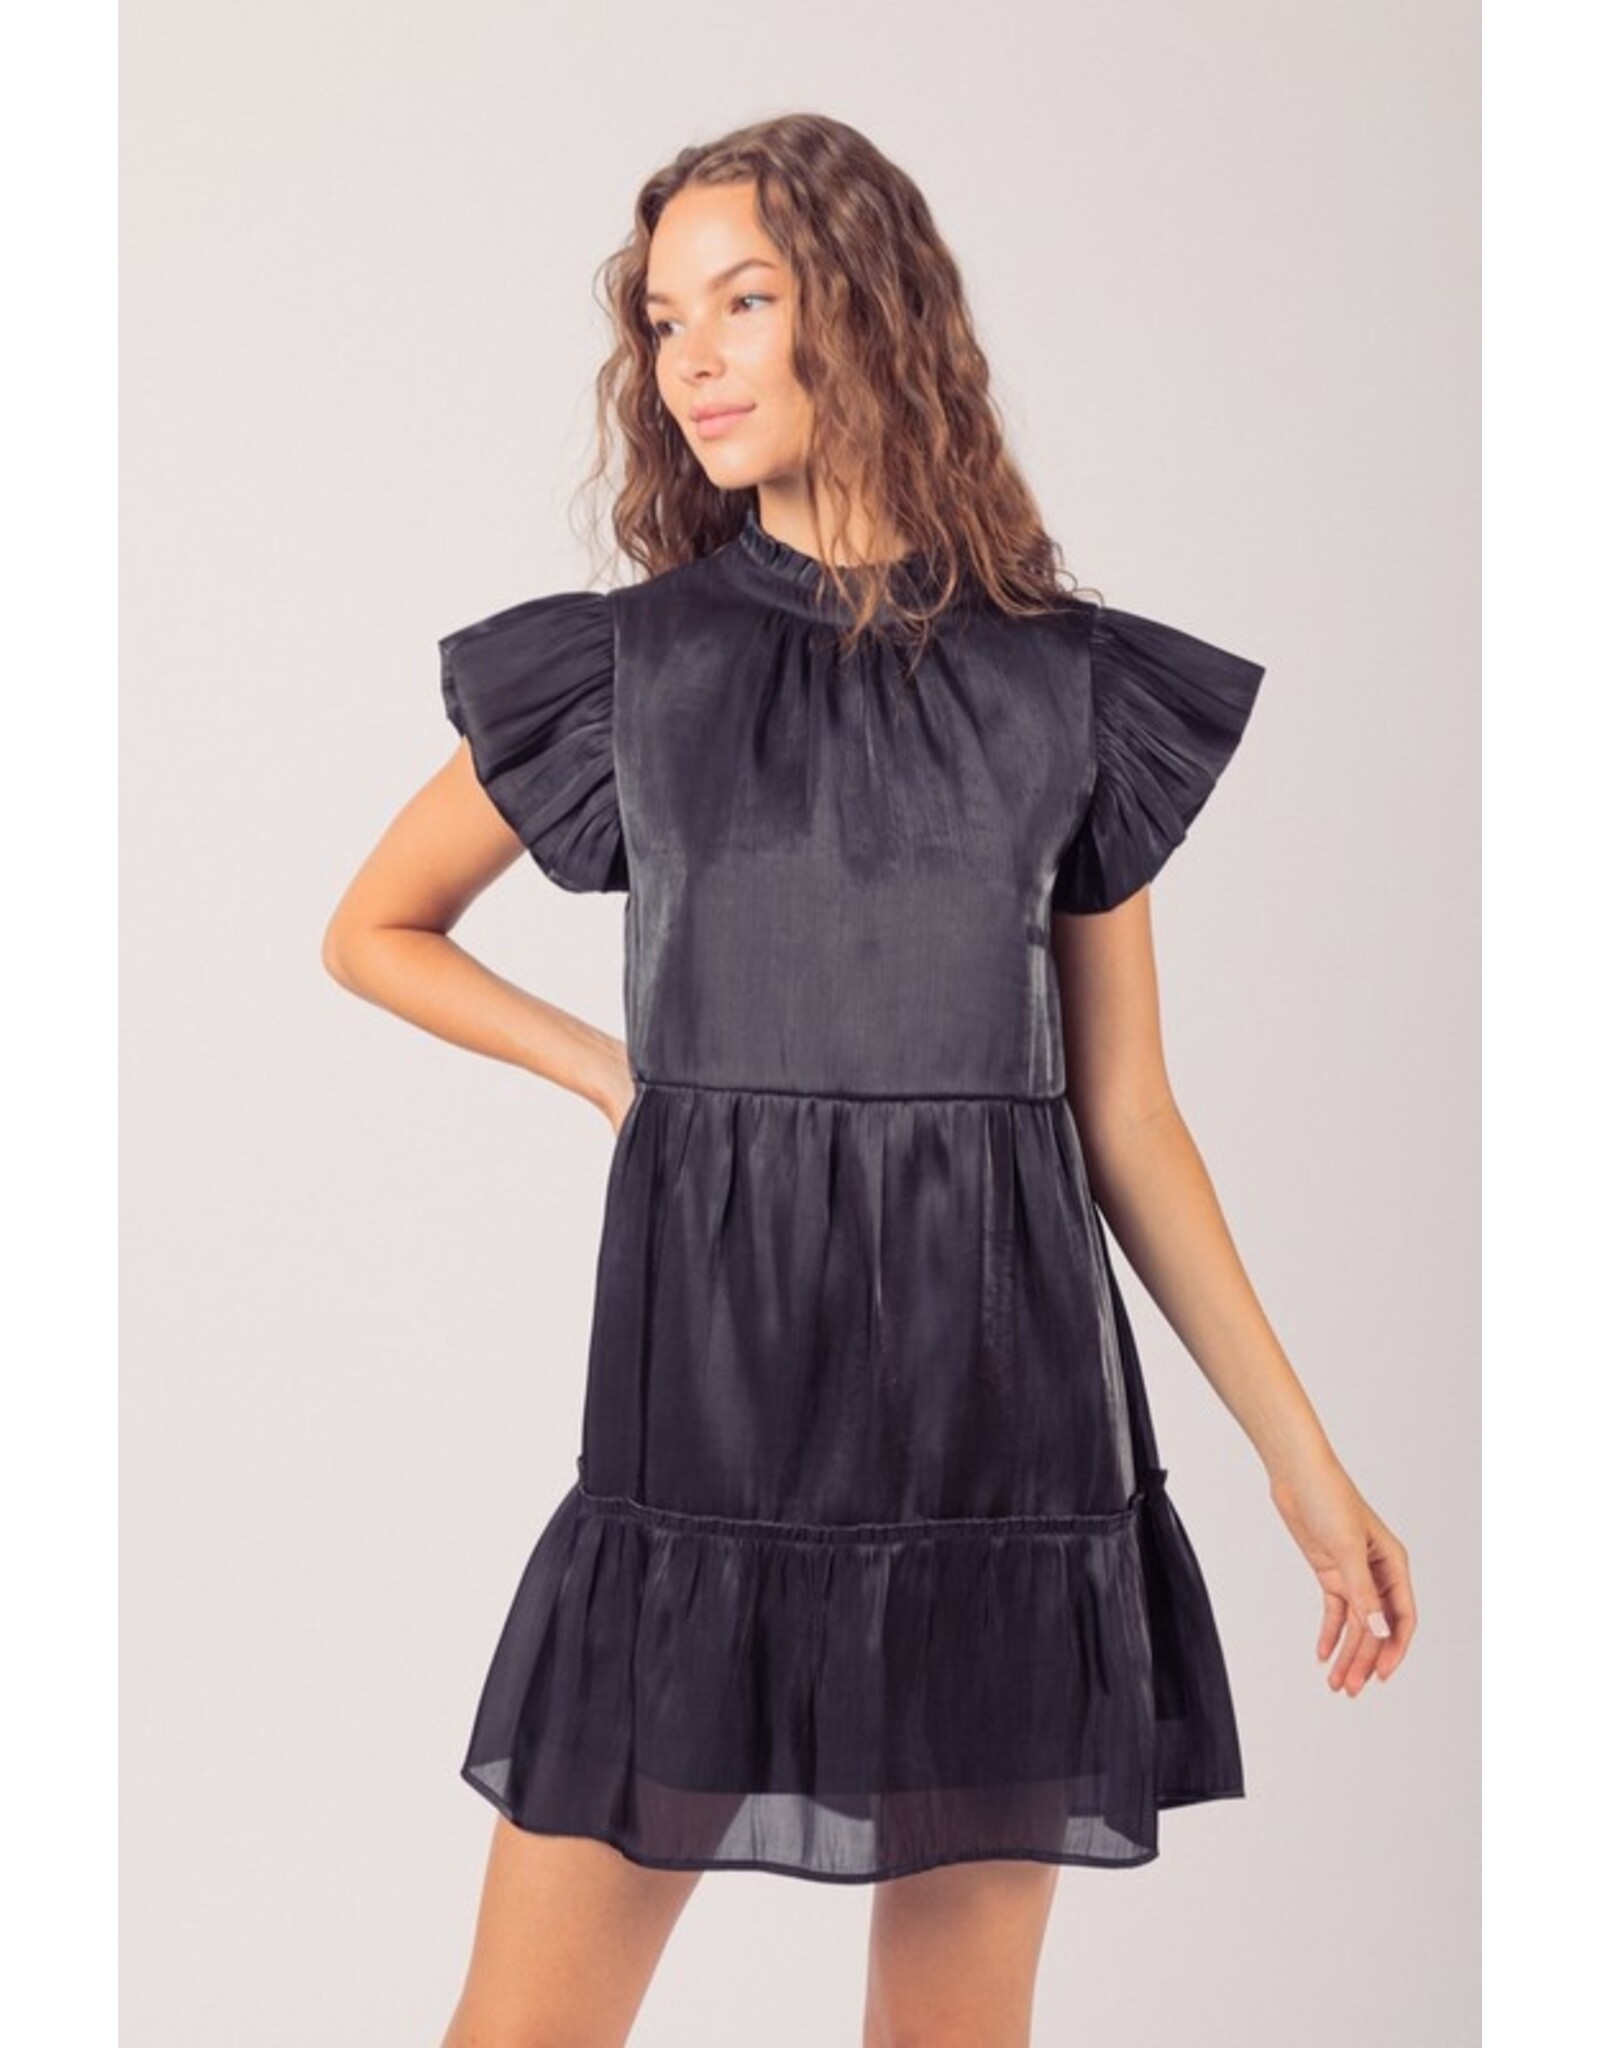 Very J Shine Black Mini Dress